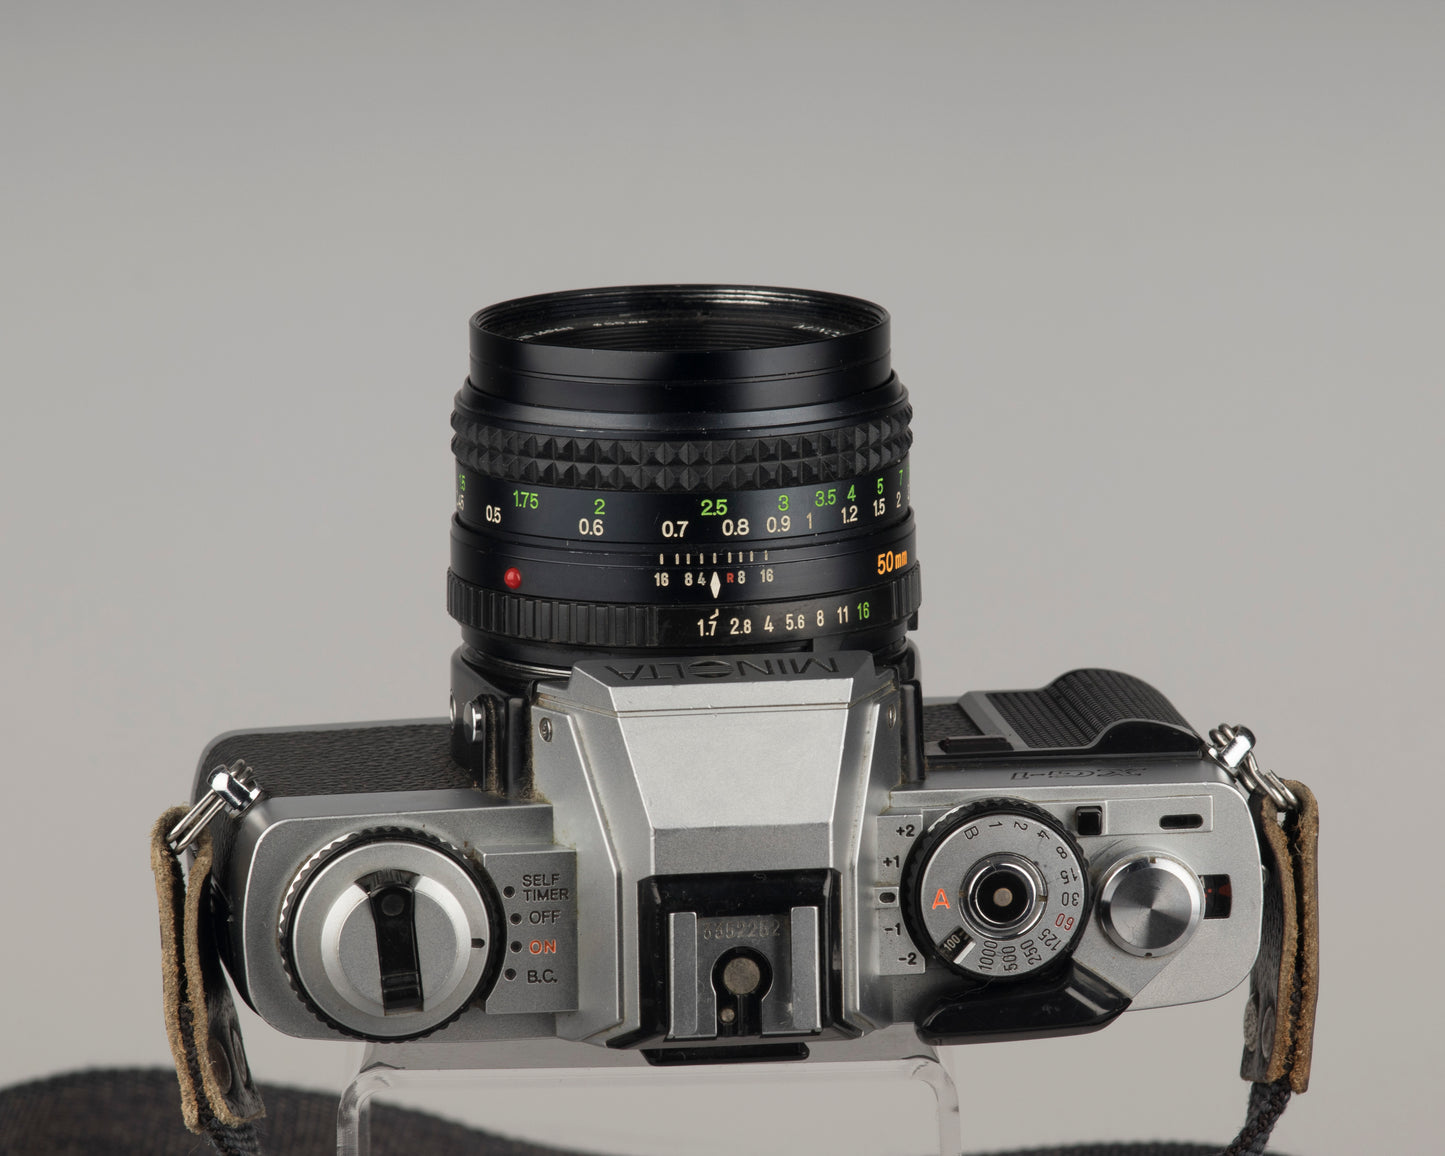 Minolta XG-1n 35mm SLR with 50mm f1.7 lens